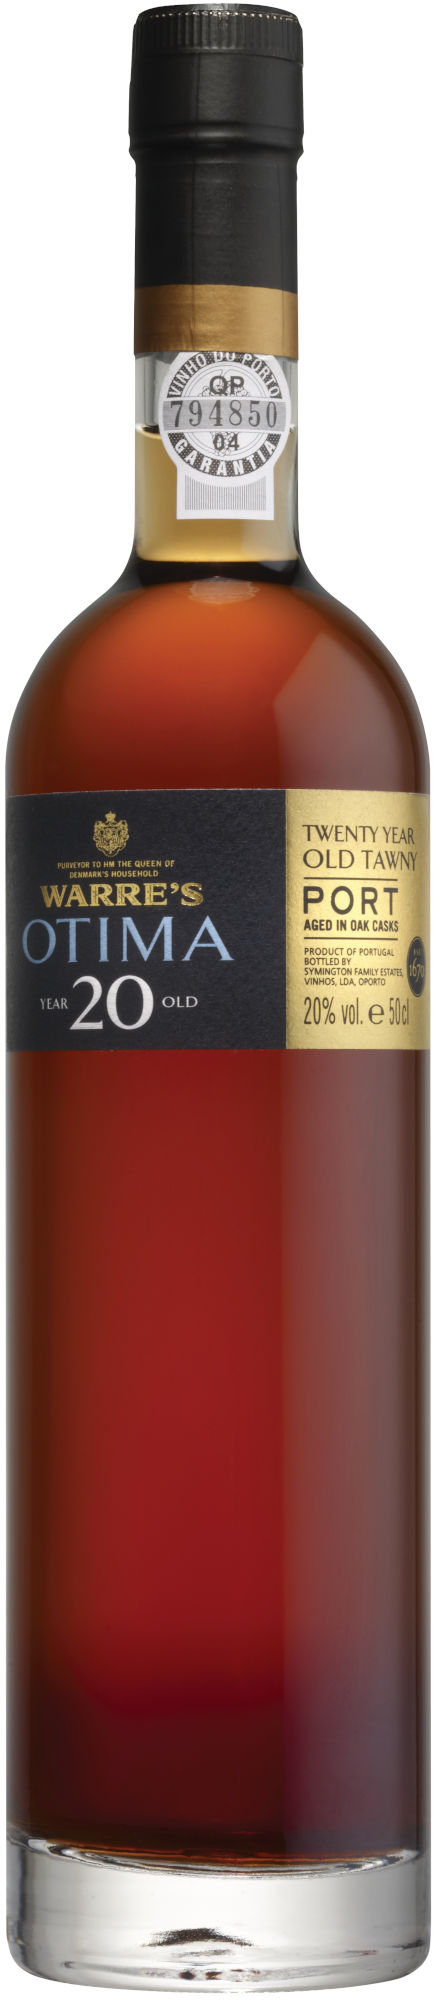 Warres-Otima-20-Years-Old-Tawny-Port